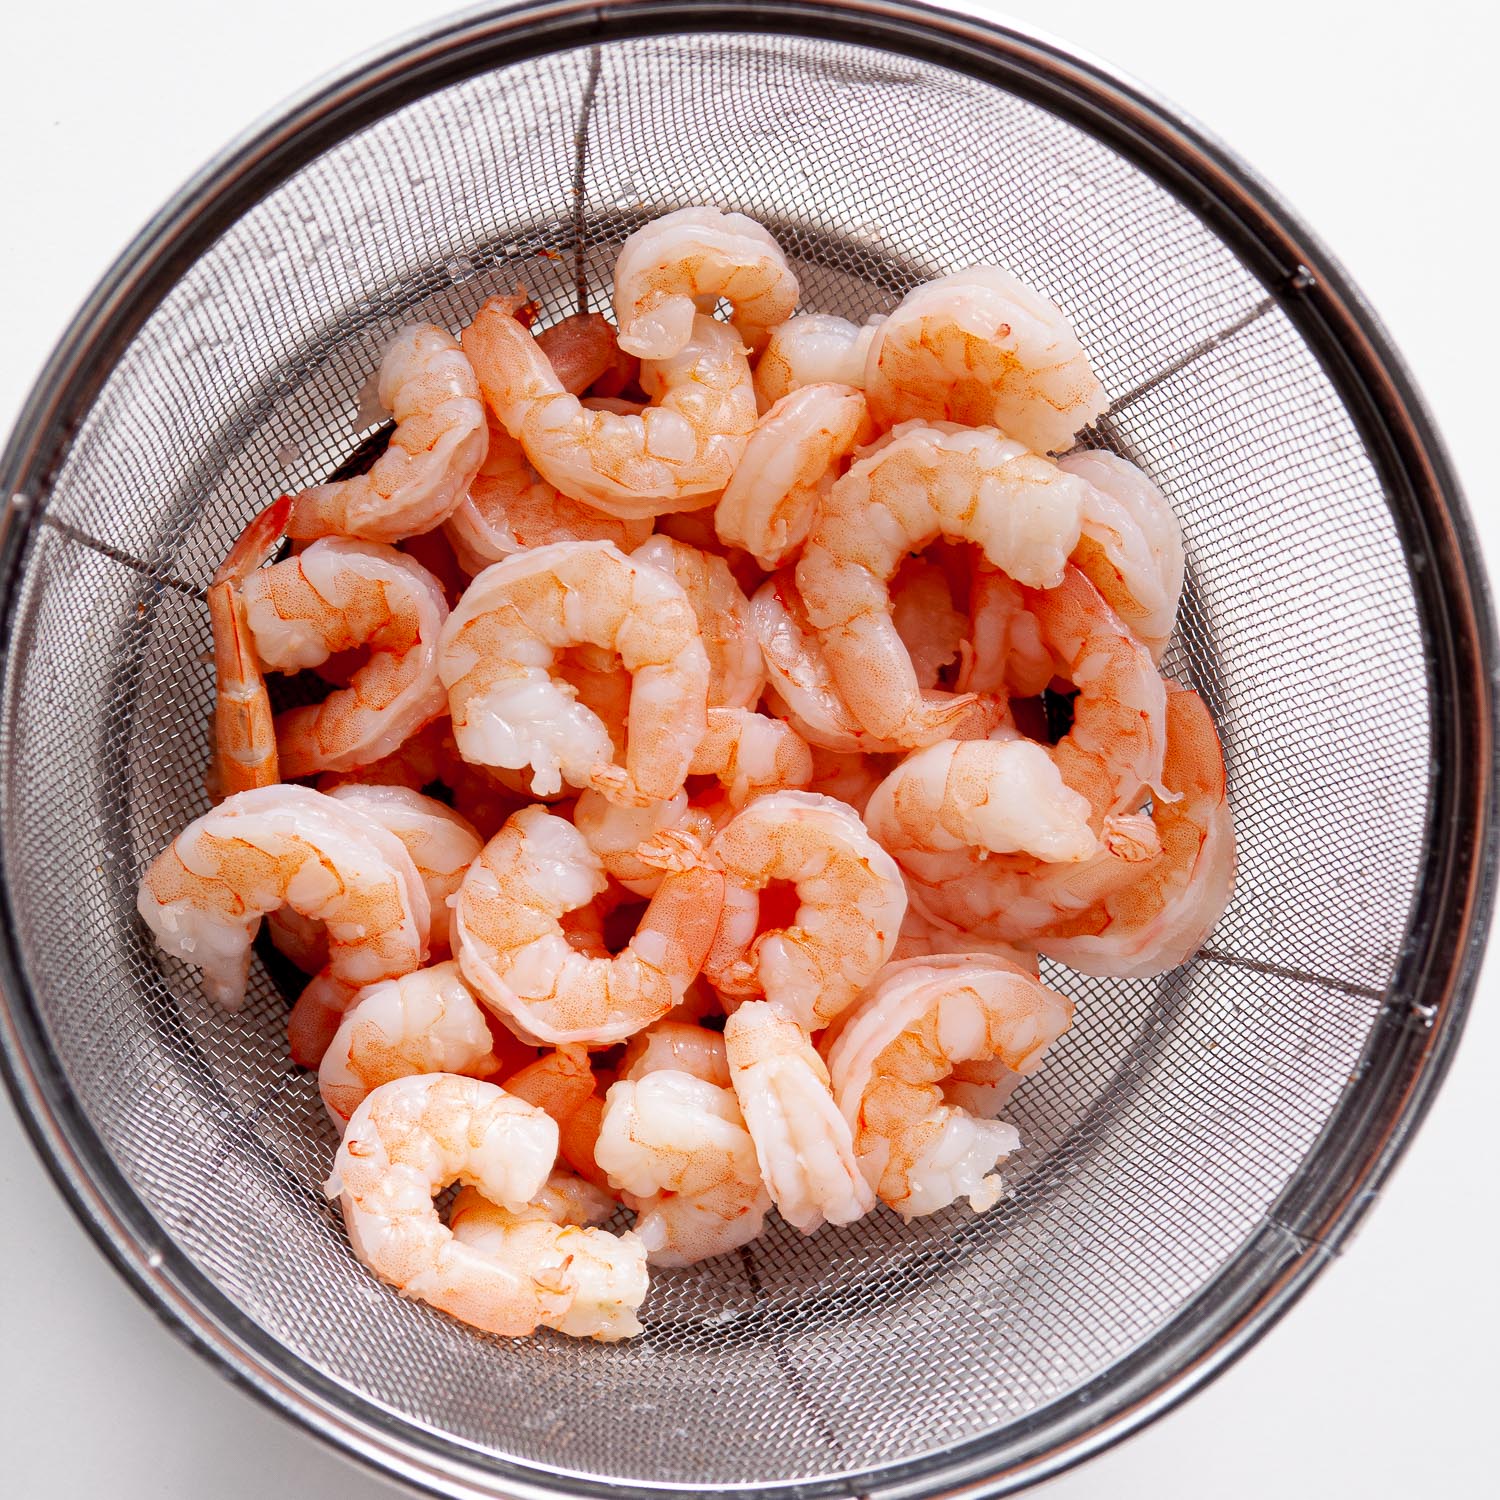 shrimp in a glass bowl